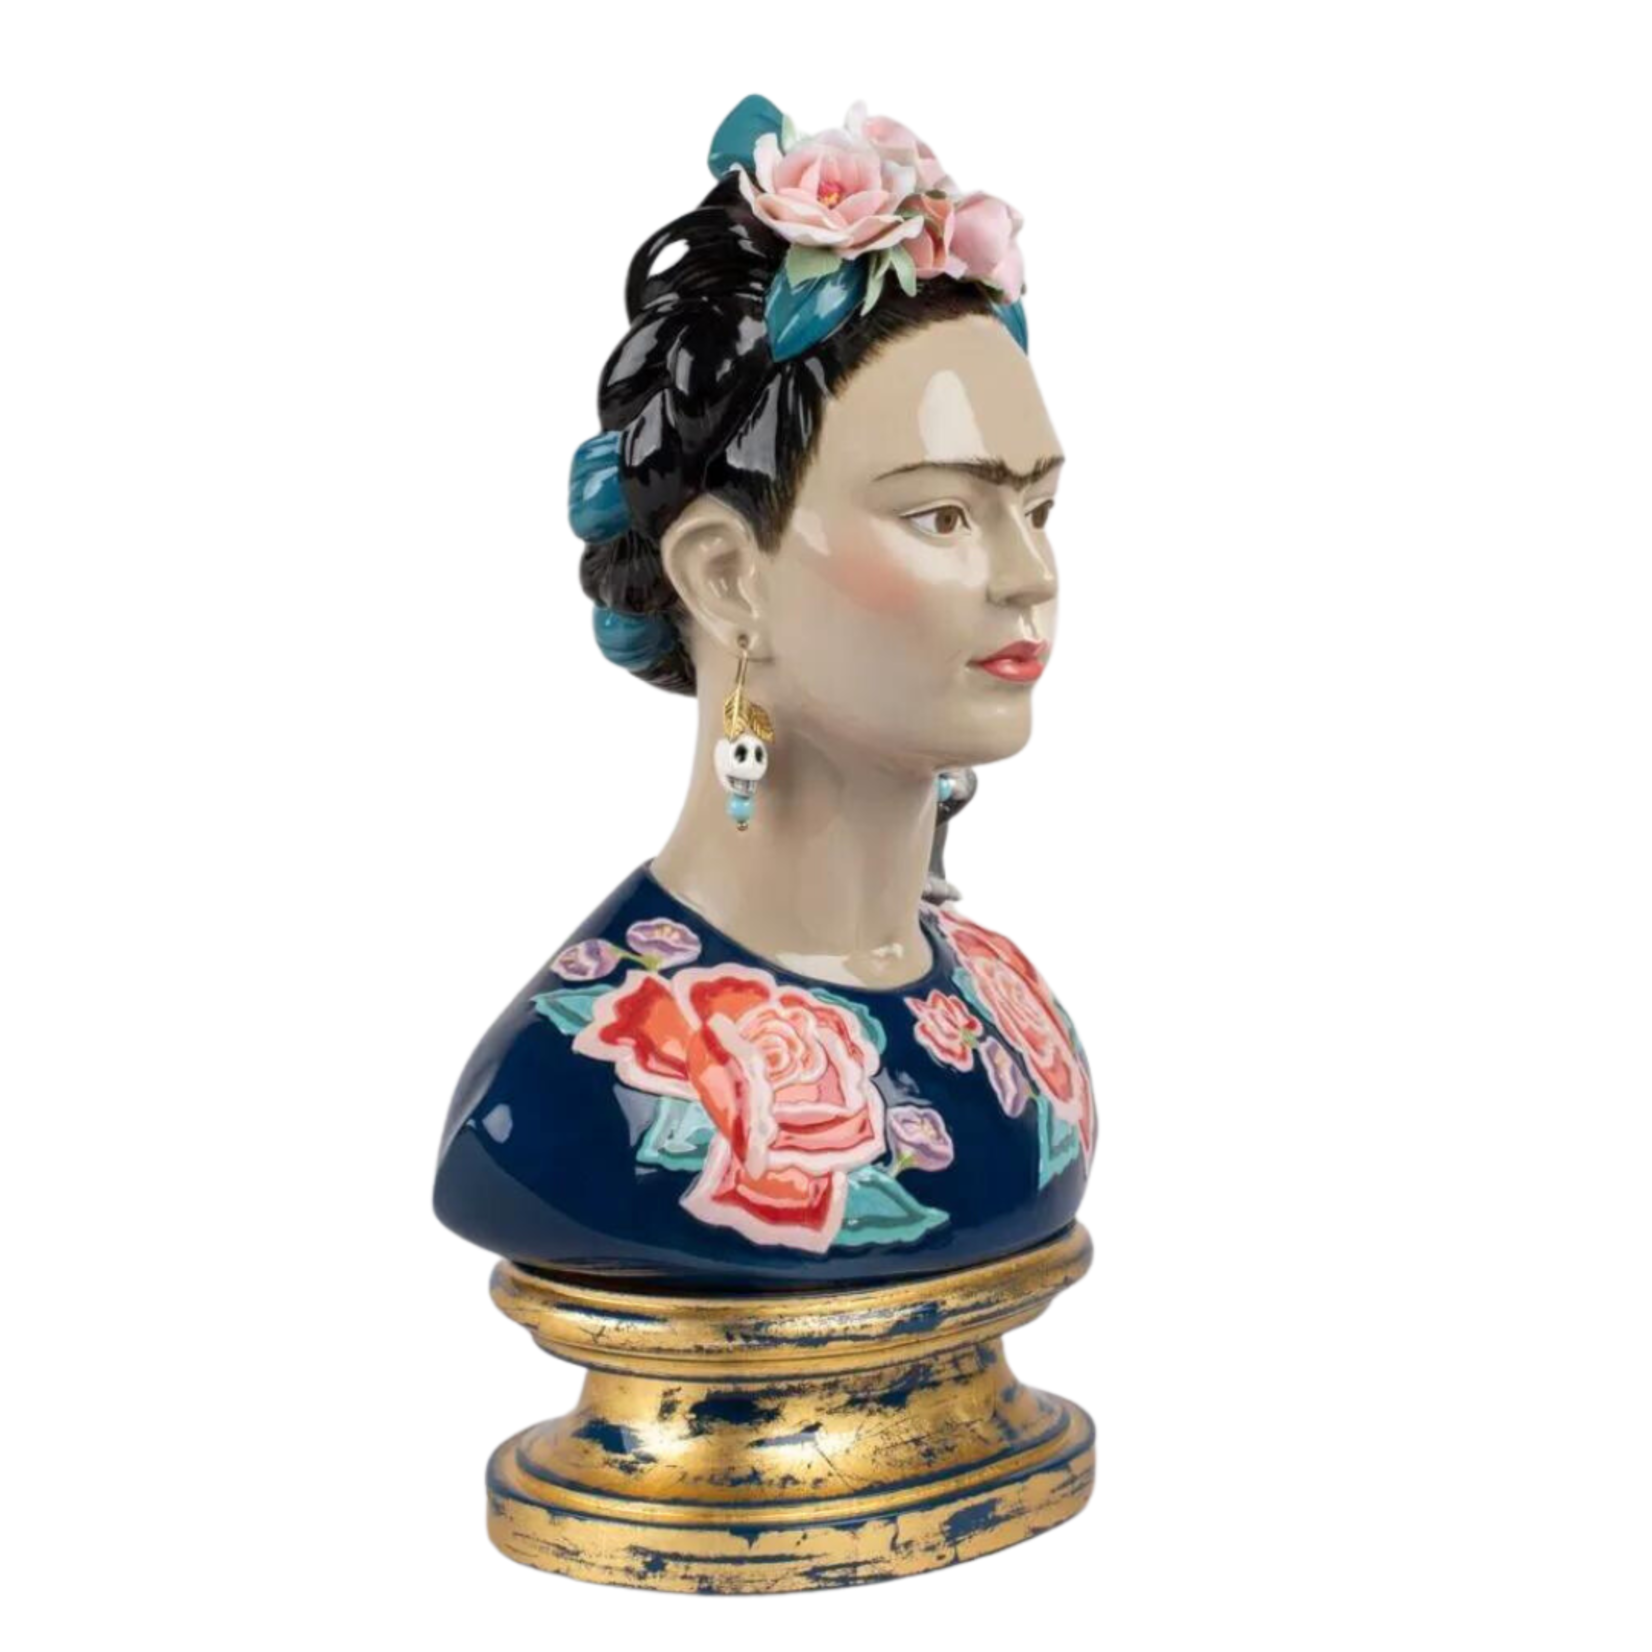 Lladro Frida Kahlo Figurine -Blue -Limited Edition